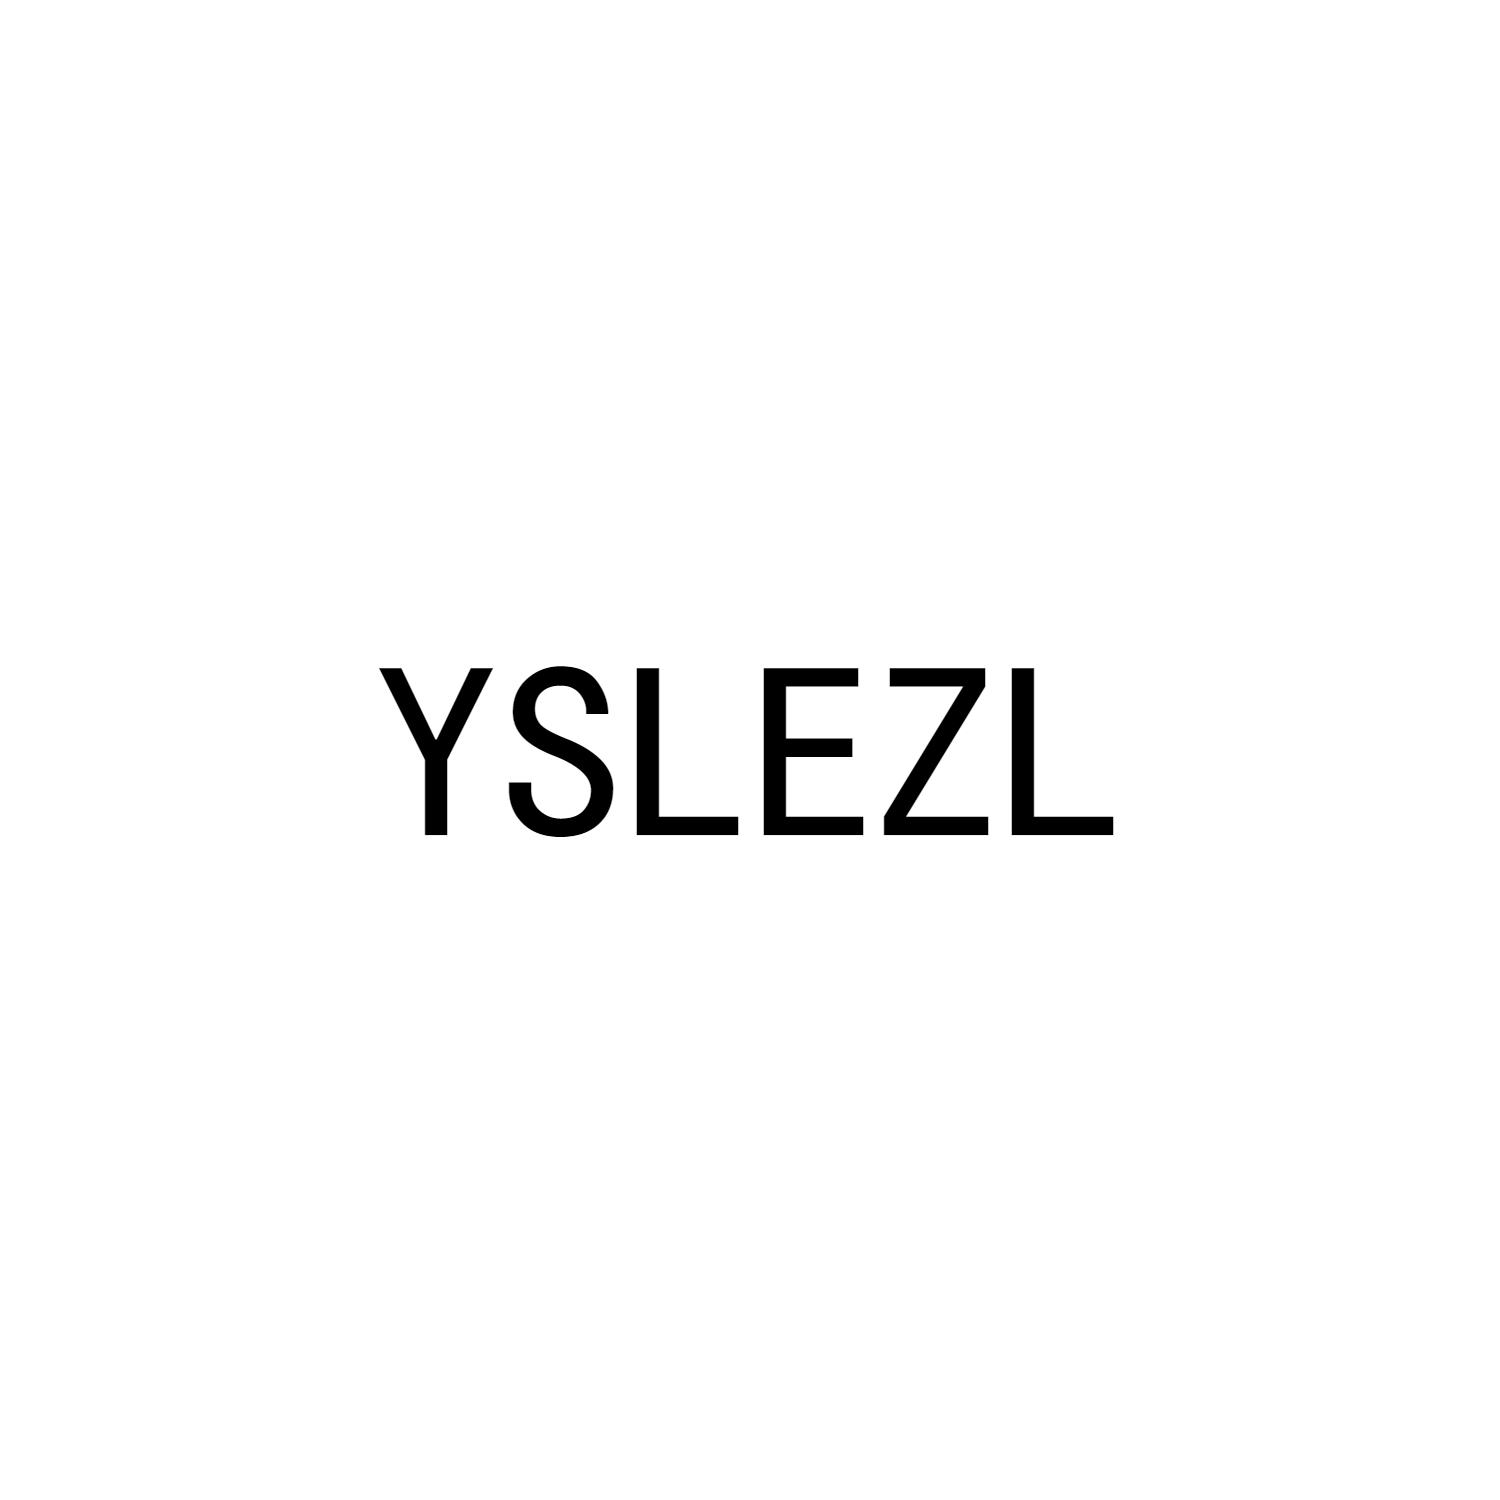 YSLEZL